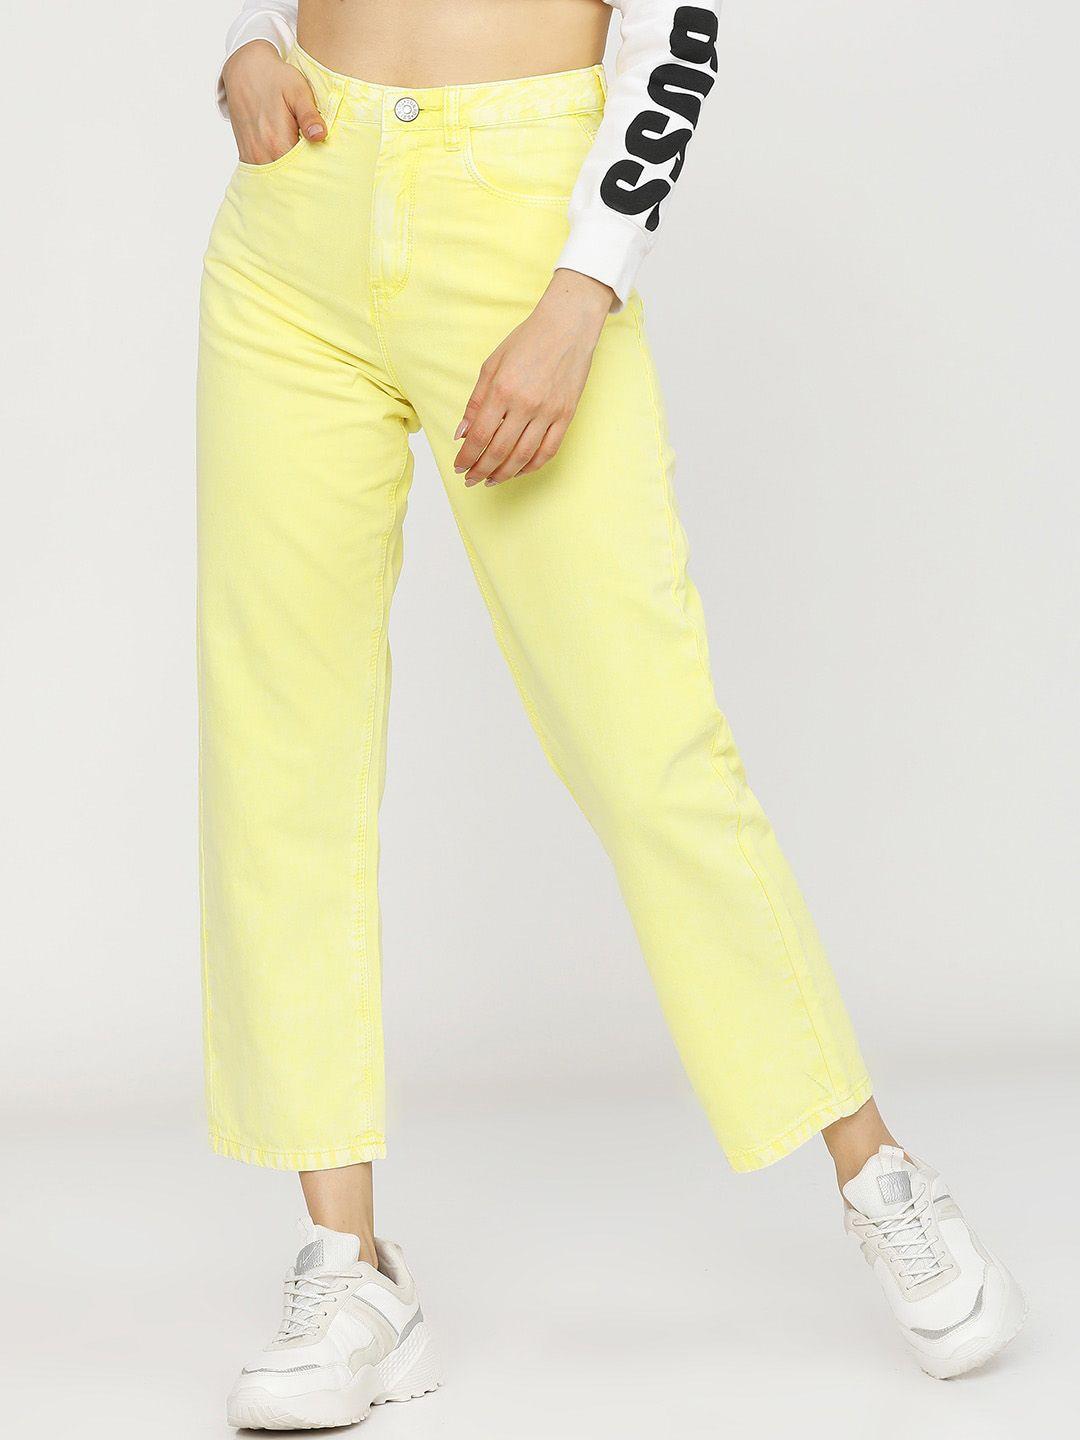 tokyo talkies women yellow cotton wide leg stretchable jeans